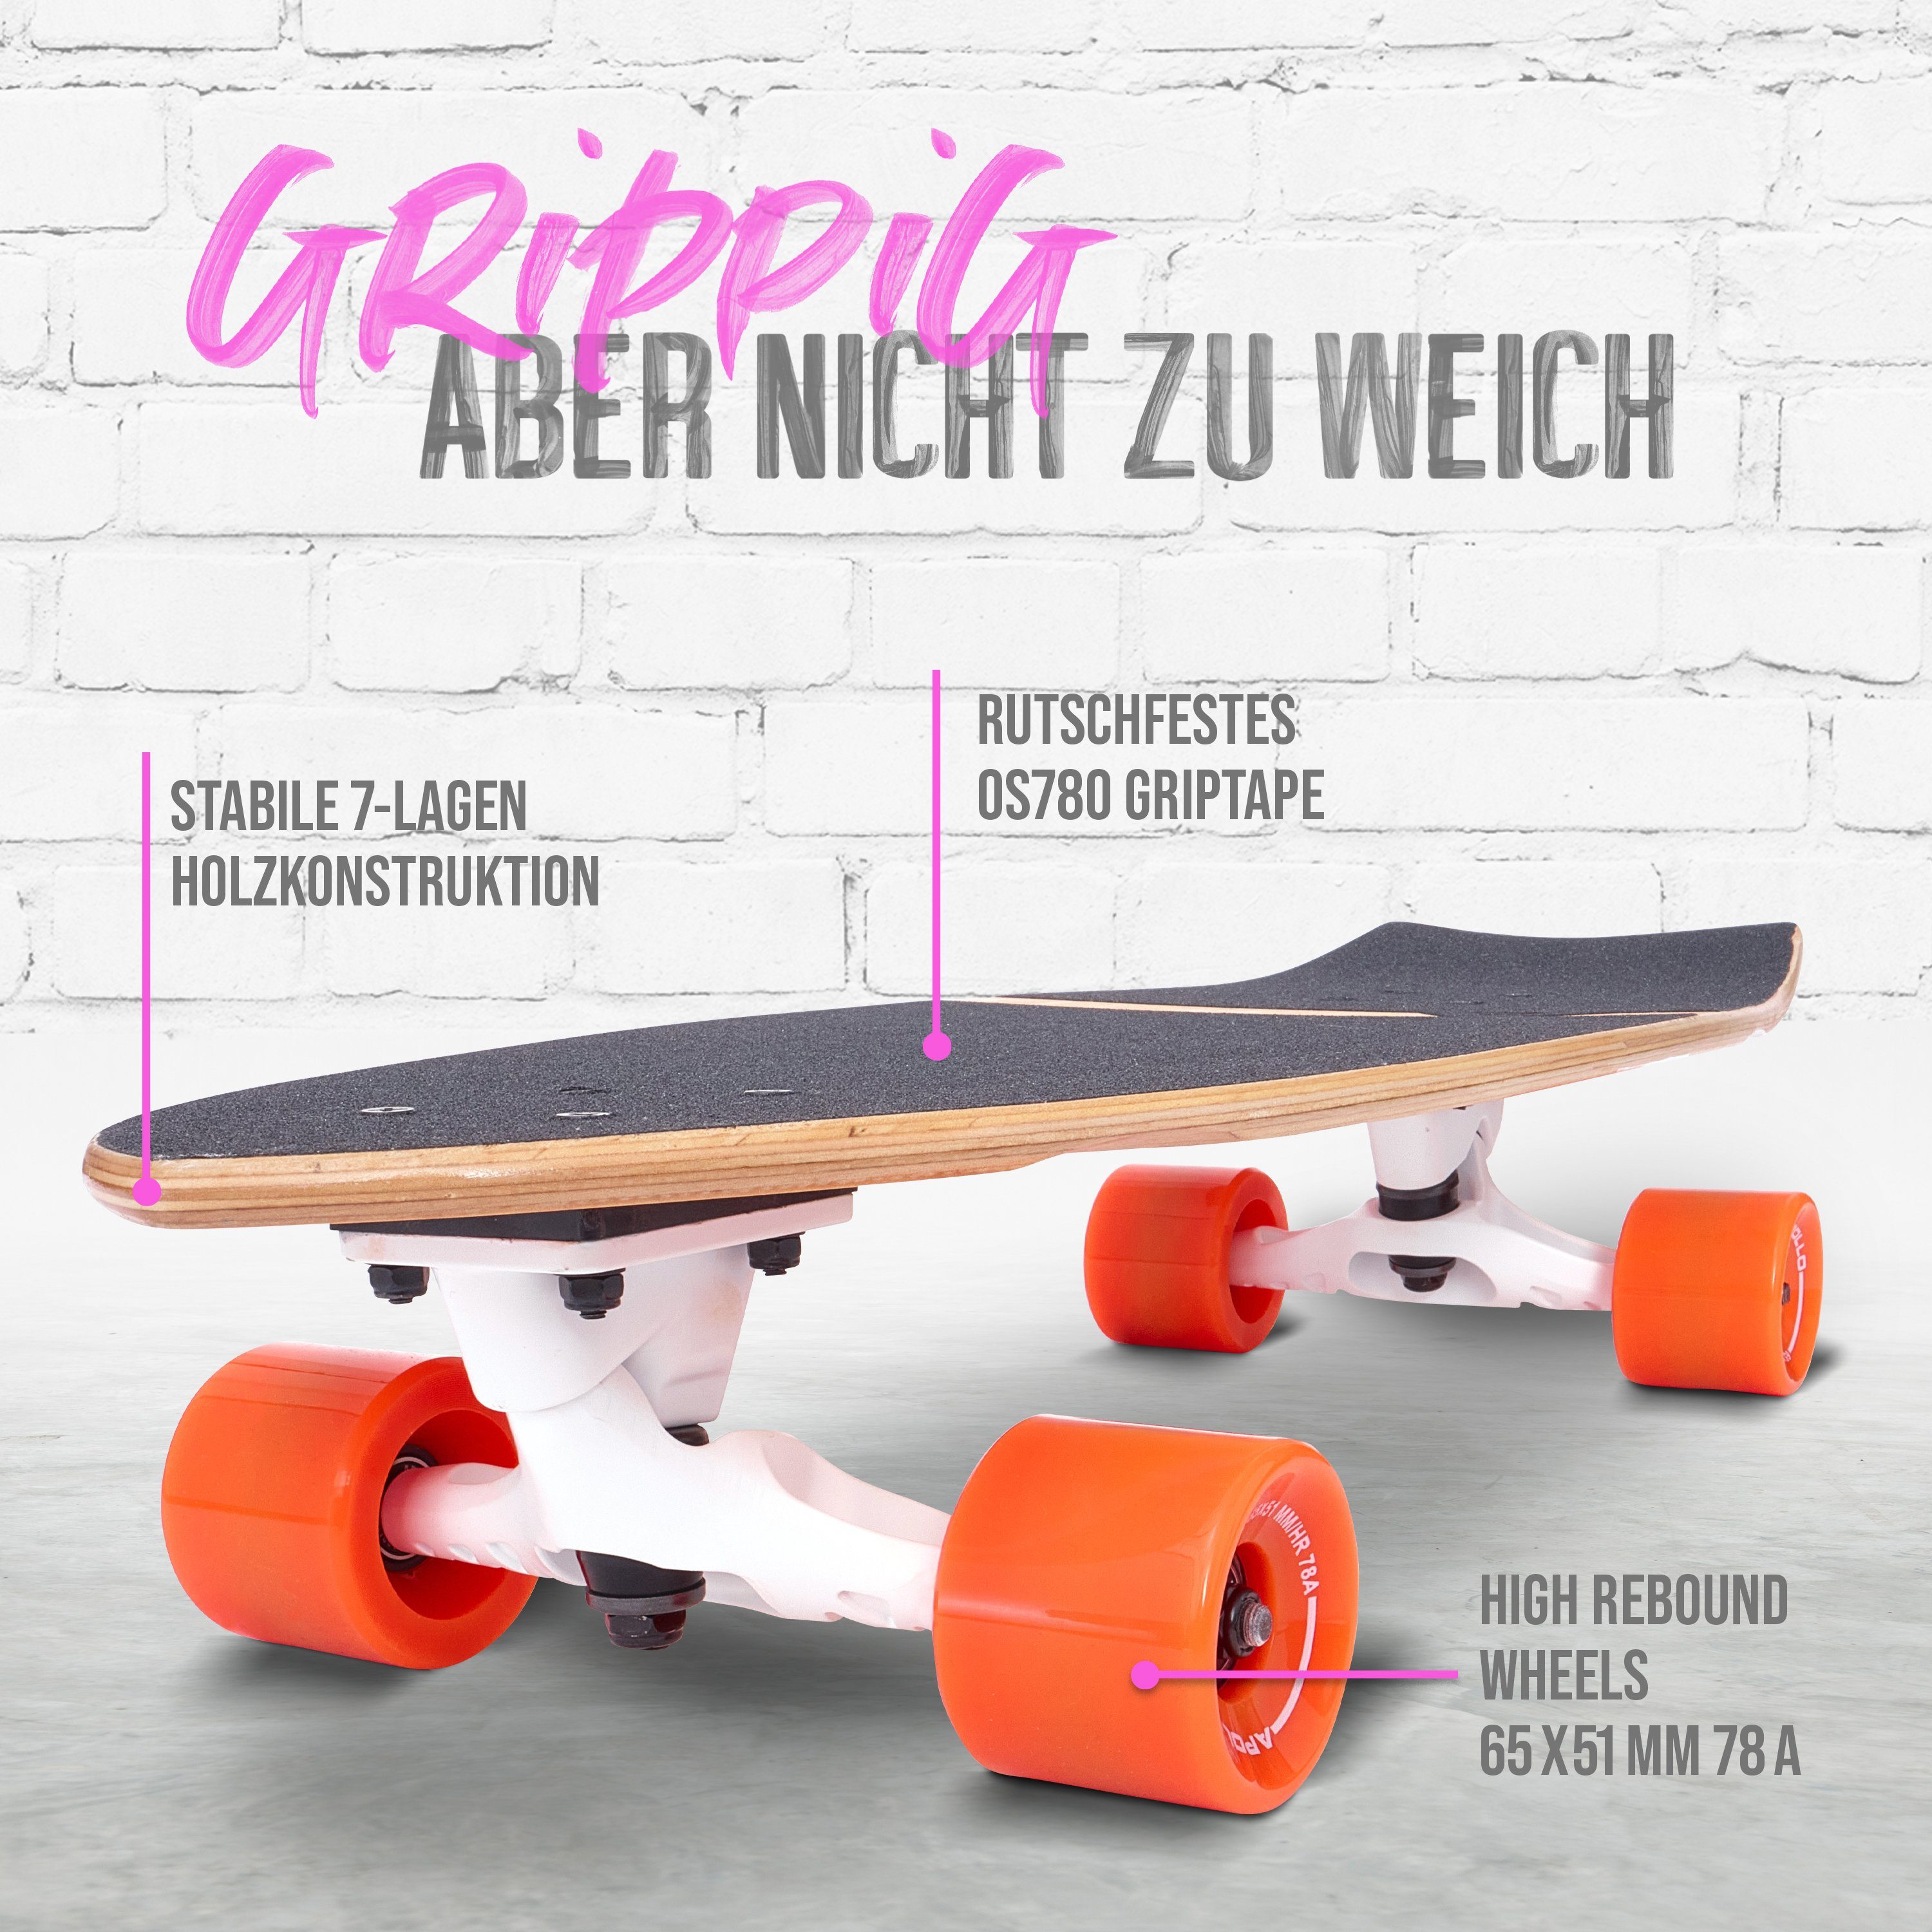 Apollo Miniskateboard Midi Longboard hochwertig Surfskate Summer stabil und Pro